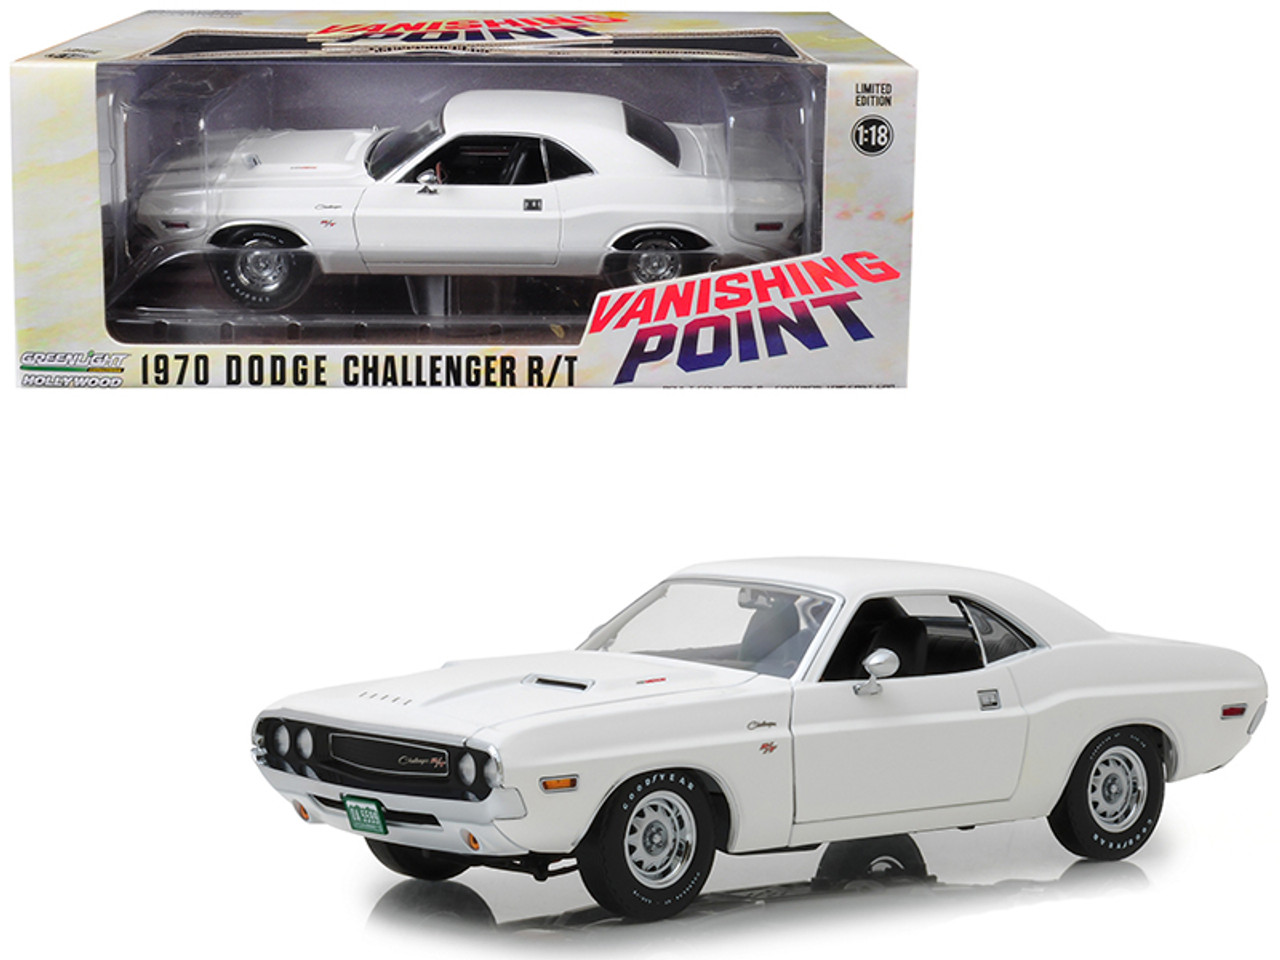 1/18 Greenlight 1970 Dodge Challenger R/T White "Vanishing Point" (1971) Movie Diecast Car Model